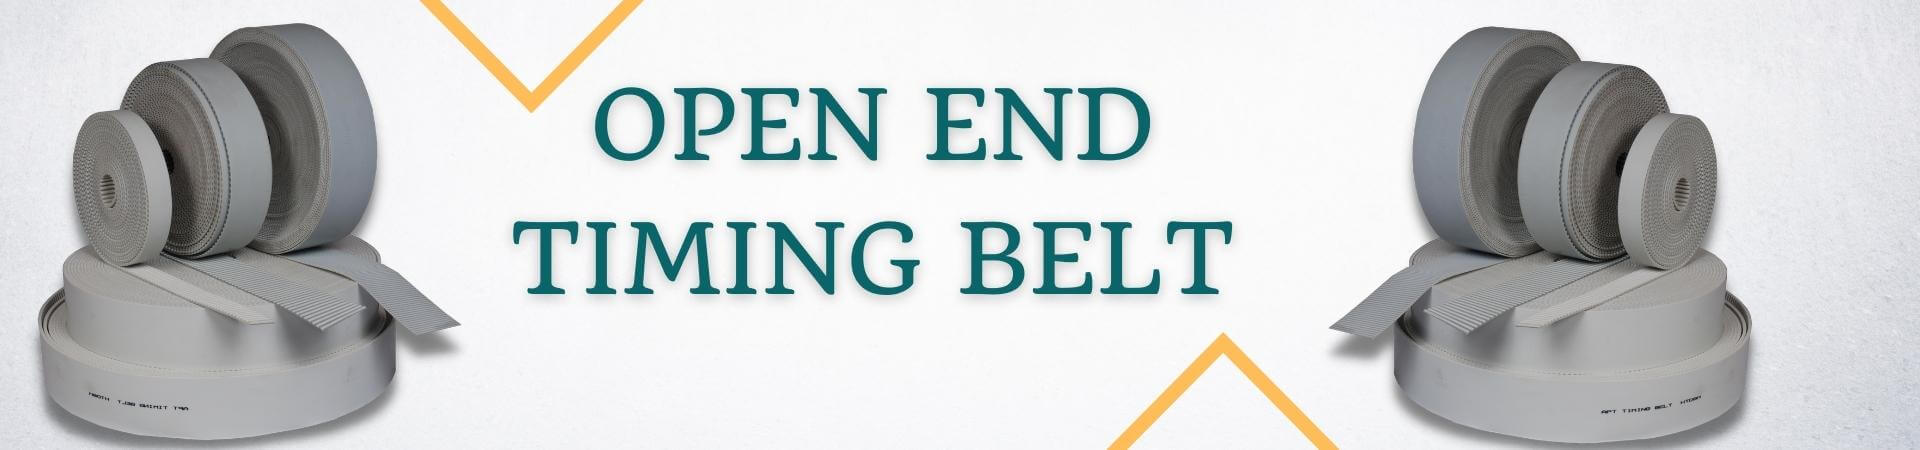 Open End Timing Belt